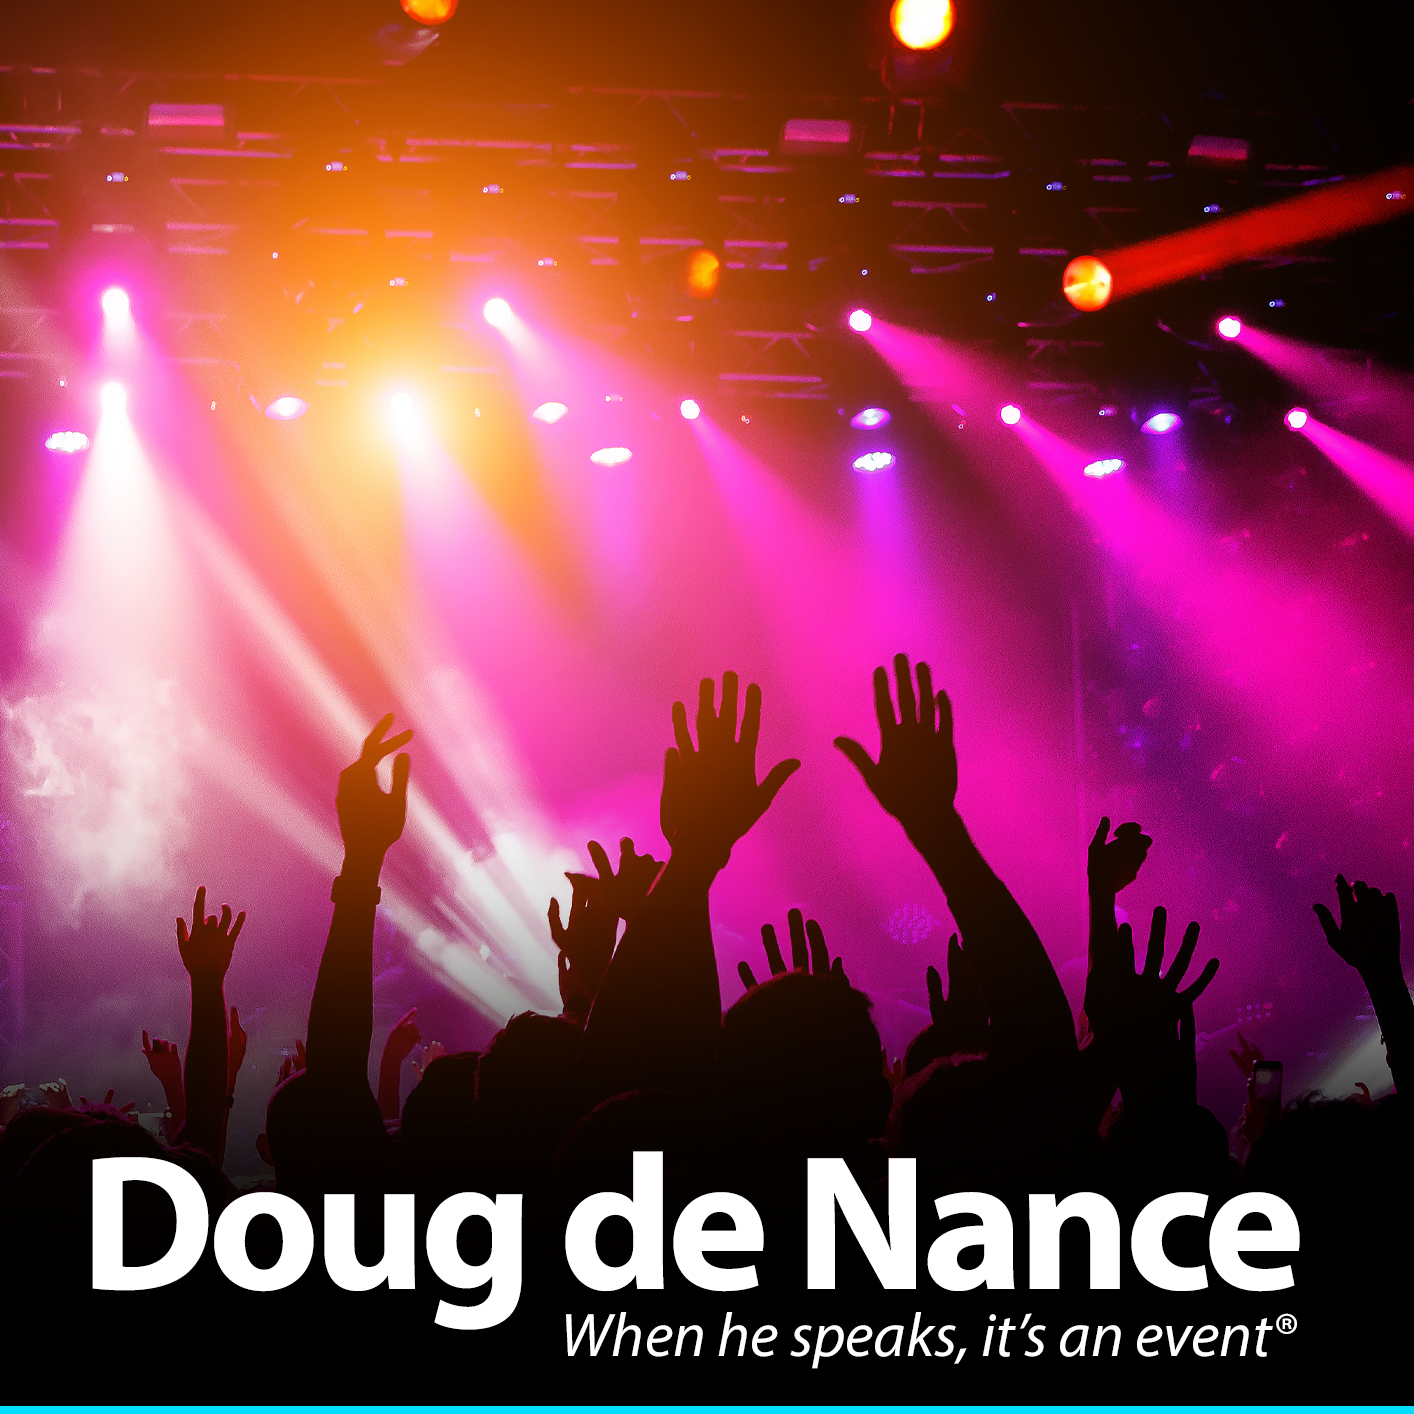 Doug de Nance Live Events are Back